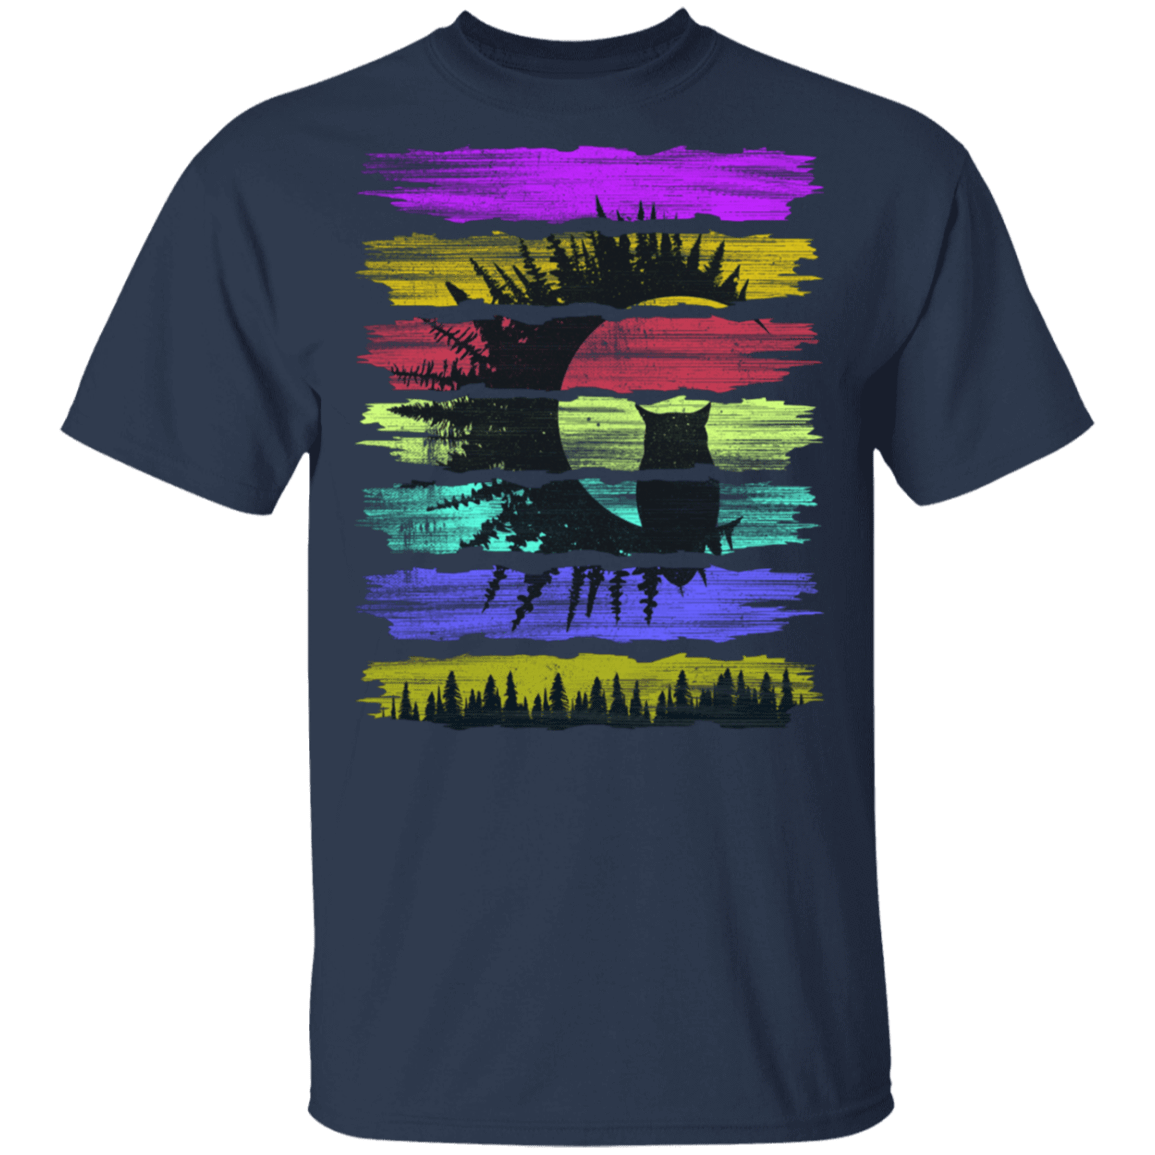 T-Shirts Navy / S Rainbow Owl T-Shirt